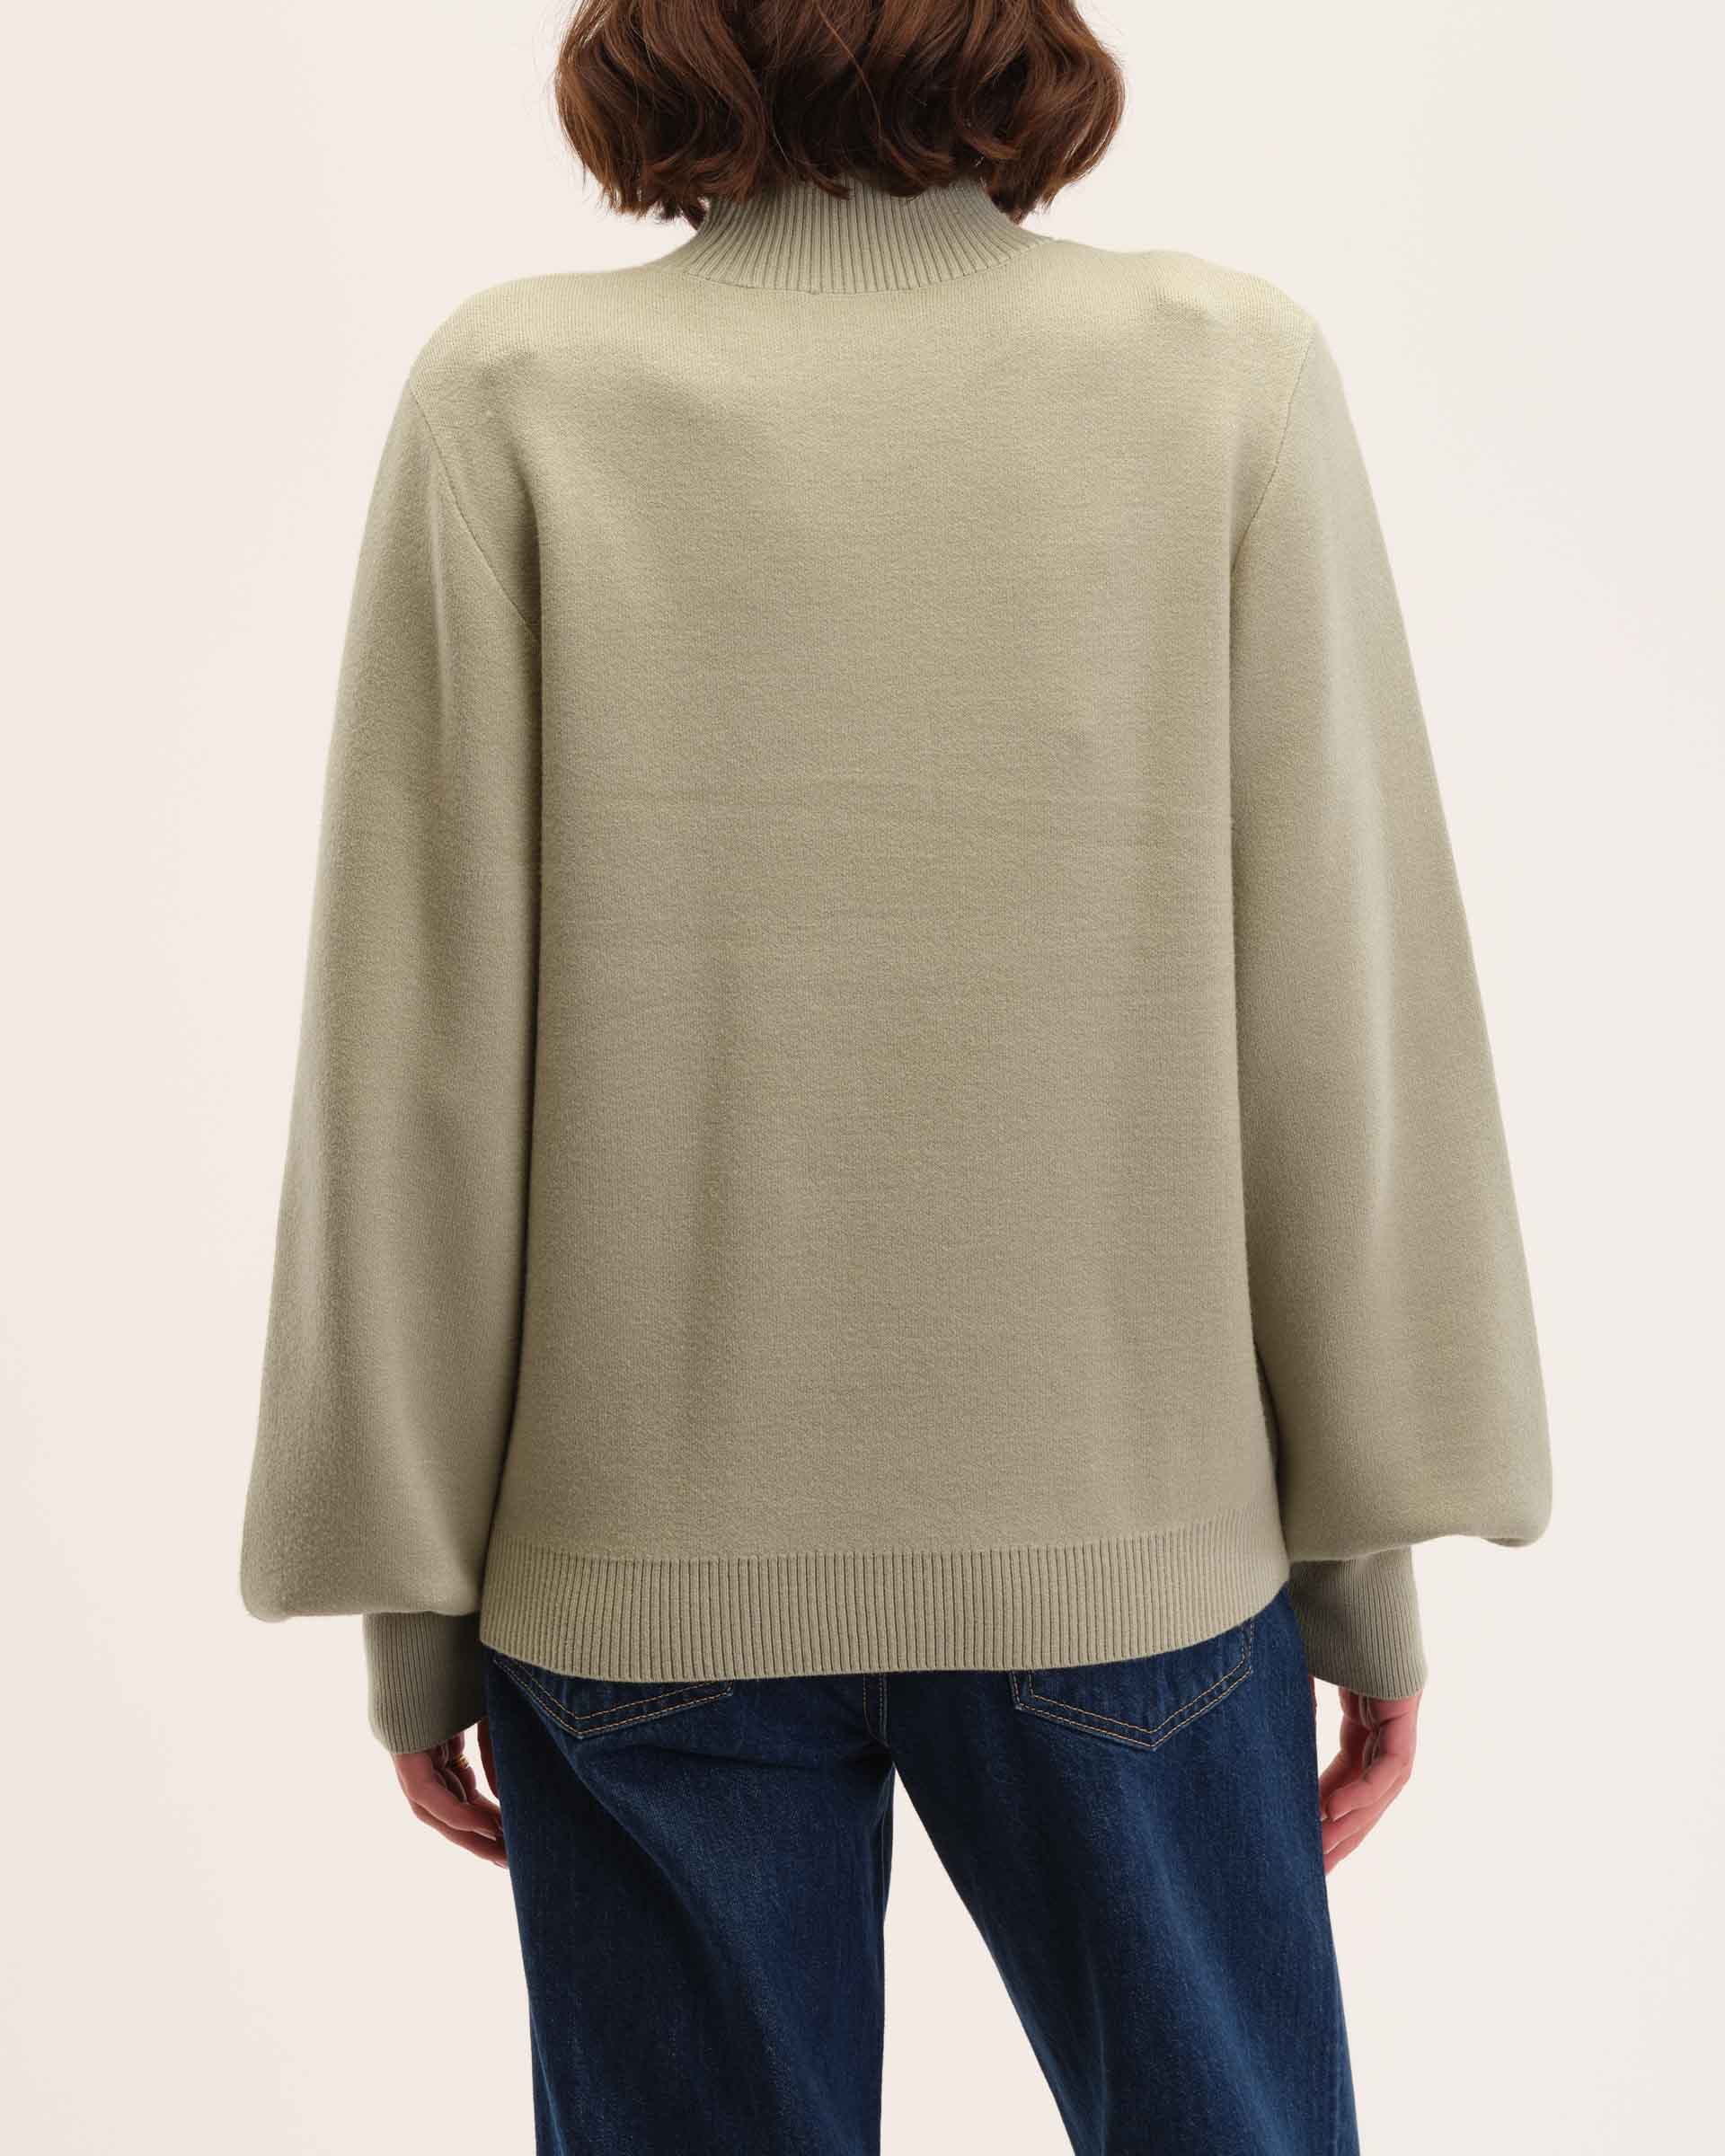 Shop Blouson Sleeve Mock Neck Pullover | Elie Elie Tahari | JANE + MERCER